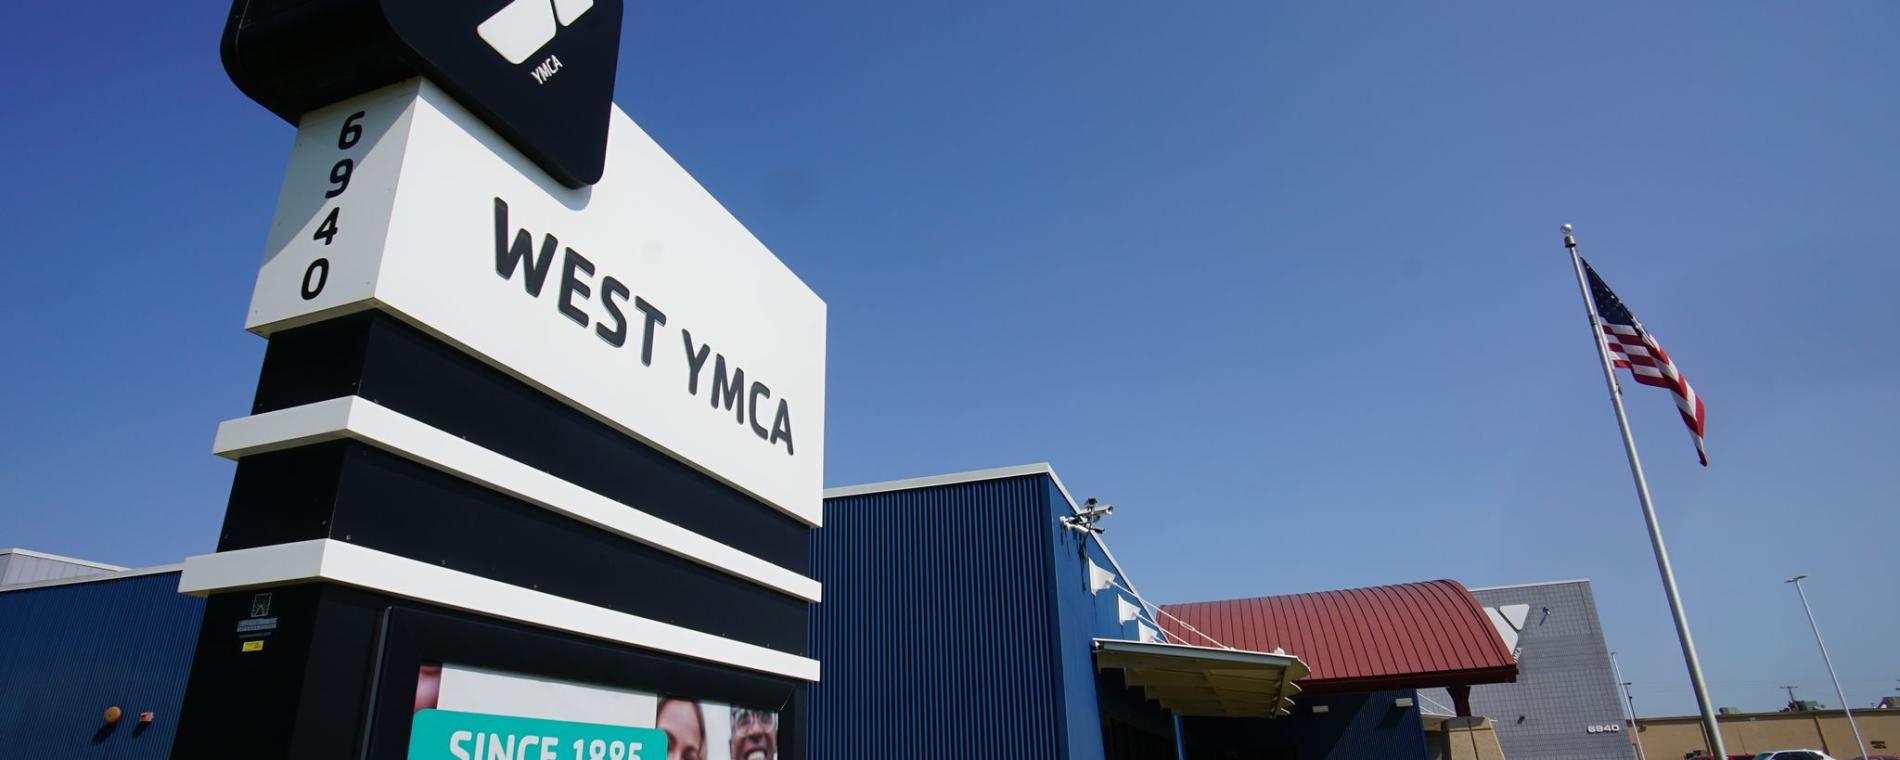 Sign West YMCA